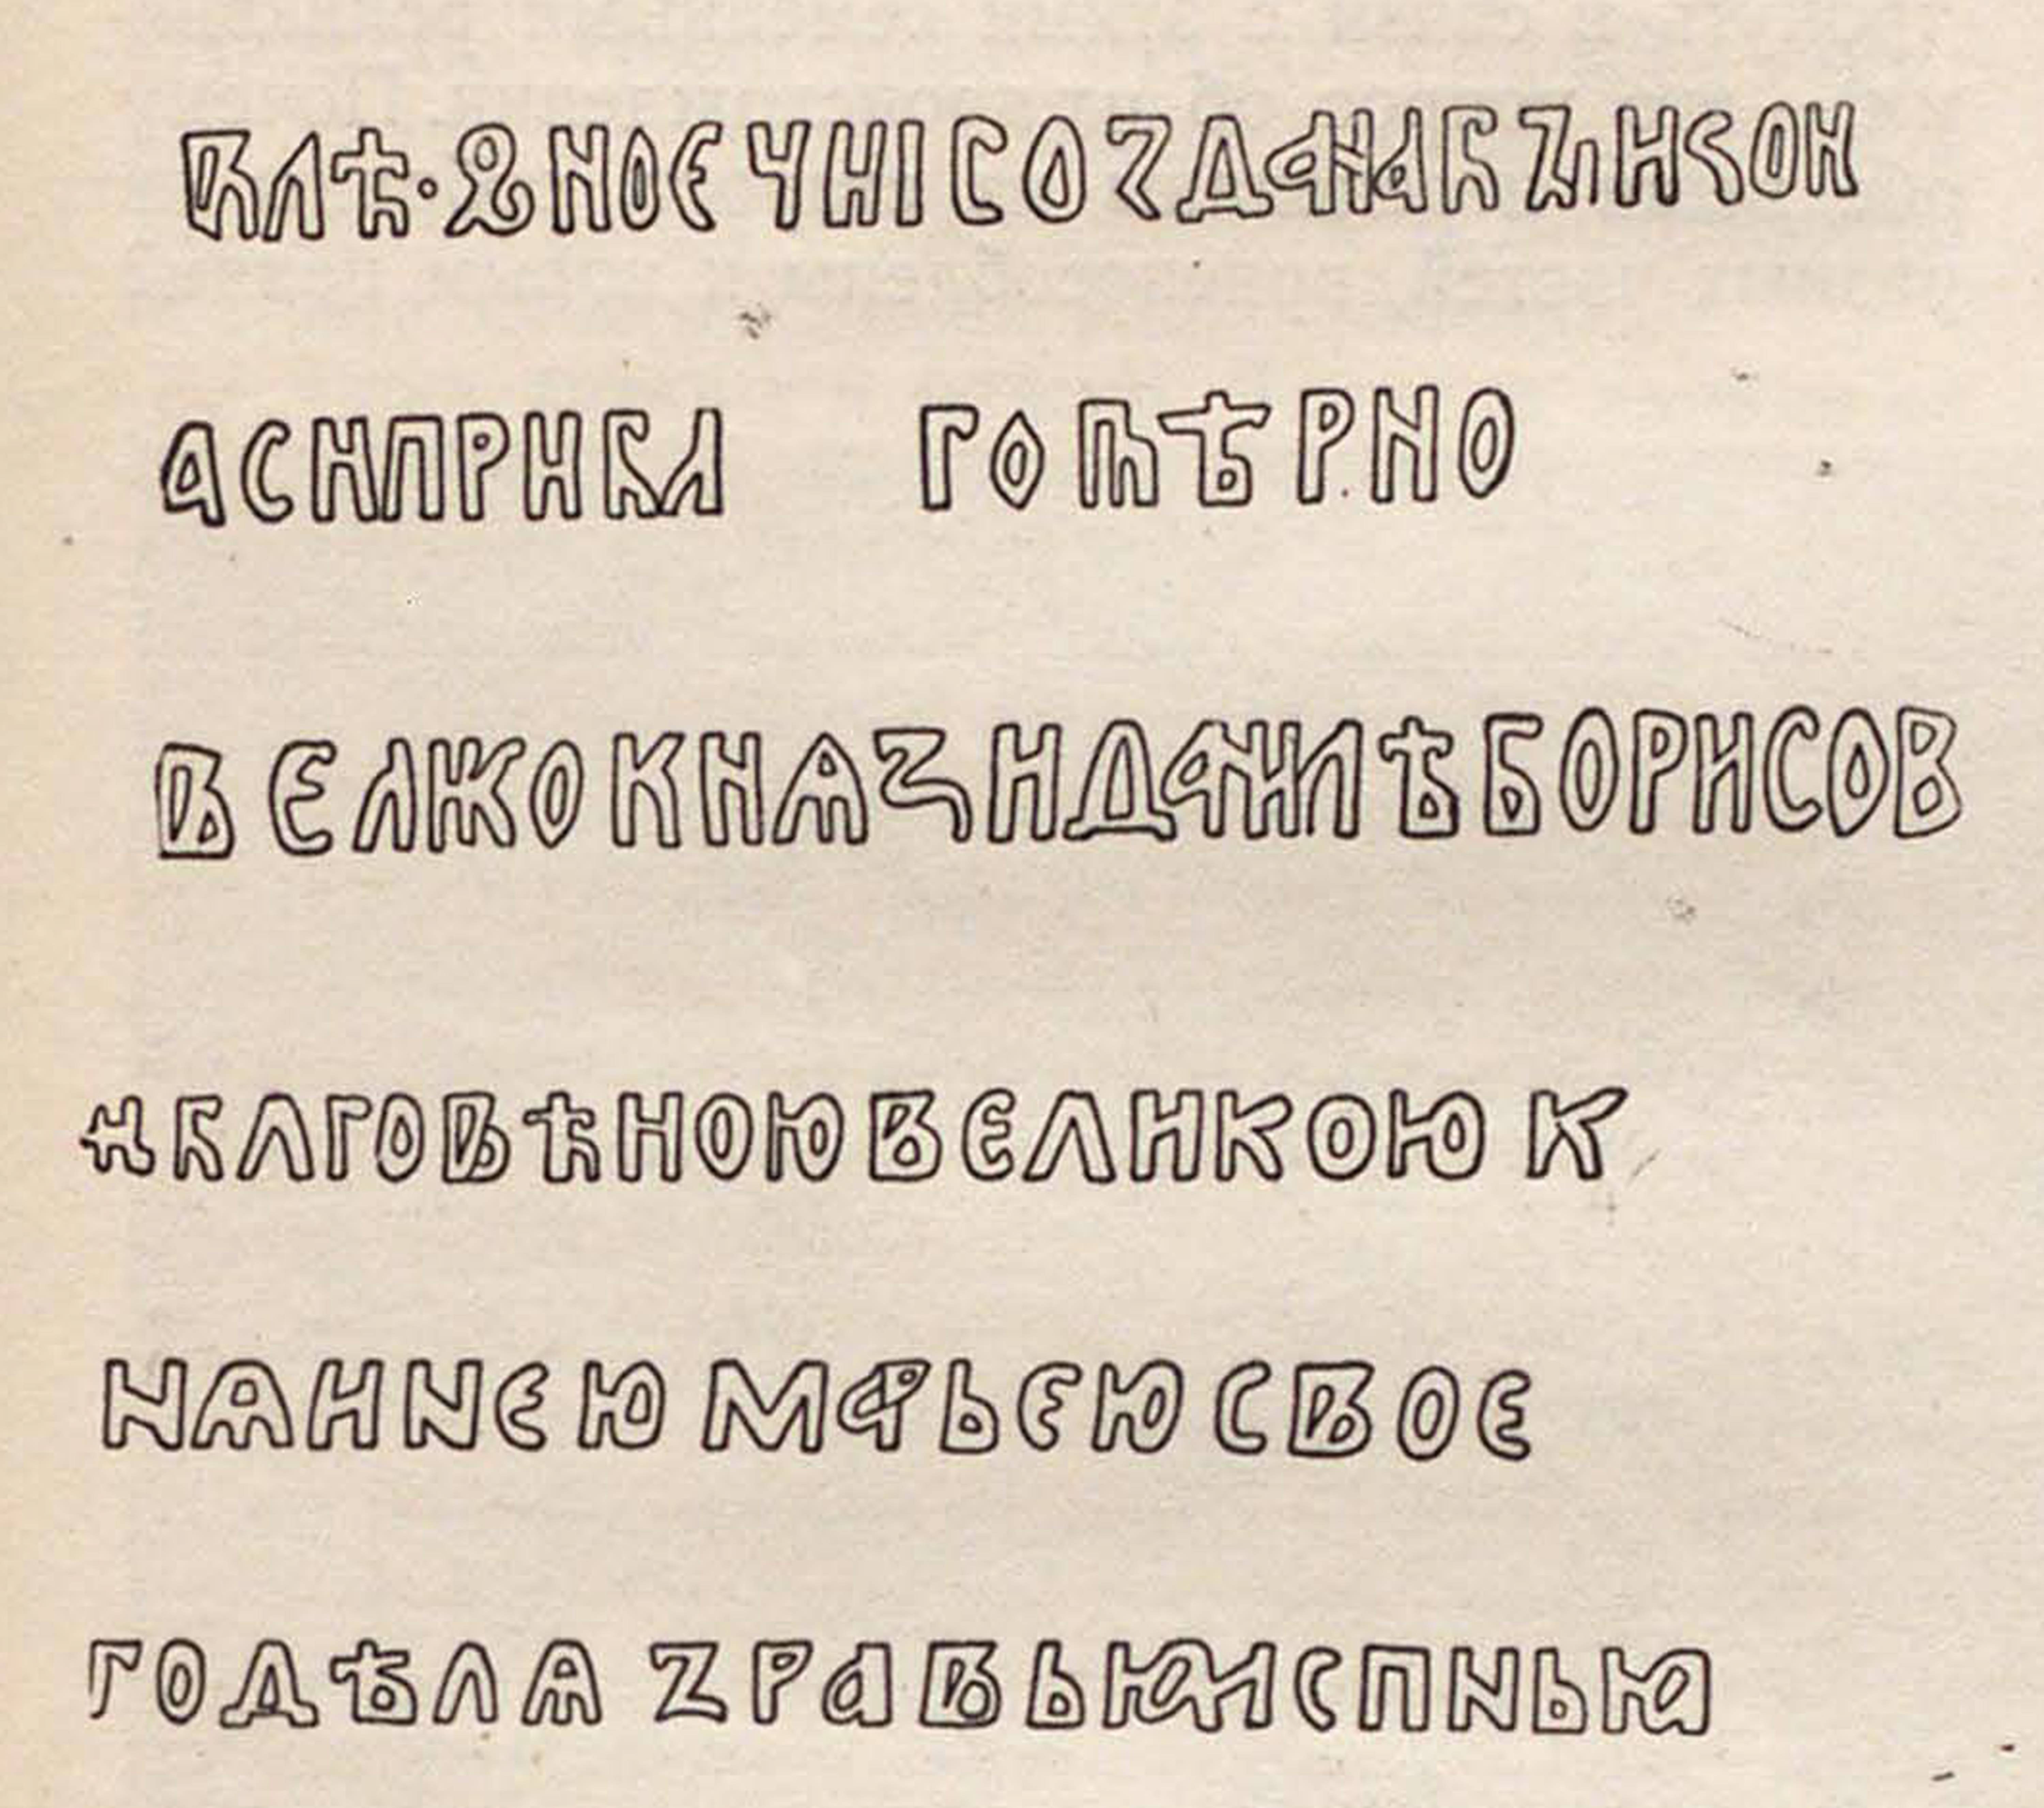 Взято из работы <a href="/epigraphy/bibliography/record/list#Рыбаков 1949а">Рыбаков 1949а</a>